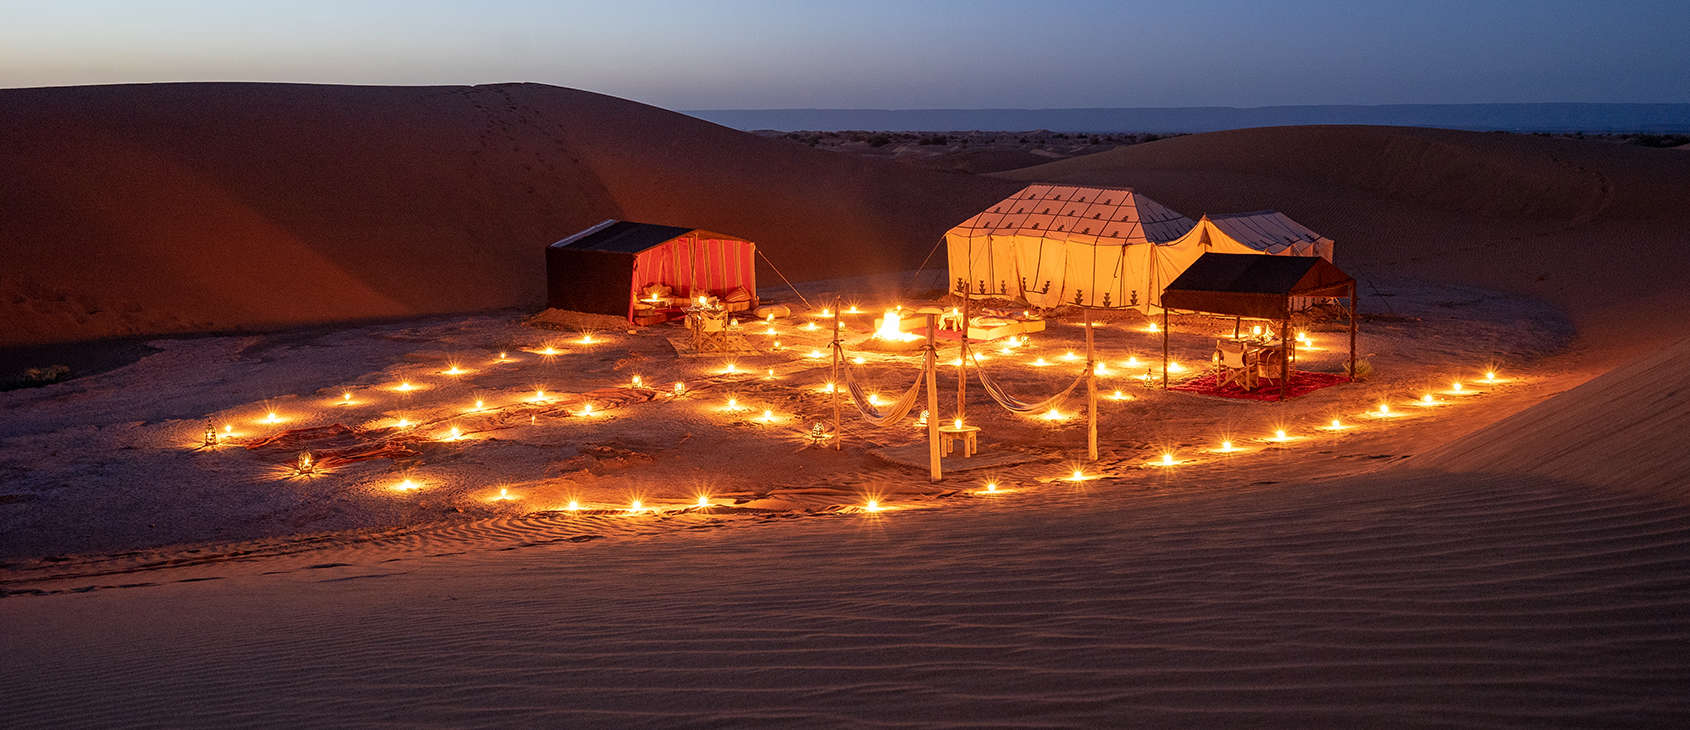 Erg Chigaga Luxury Desert Camp Morocco, Private Nomadic Camp at dusk